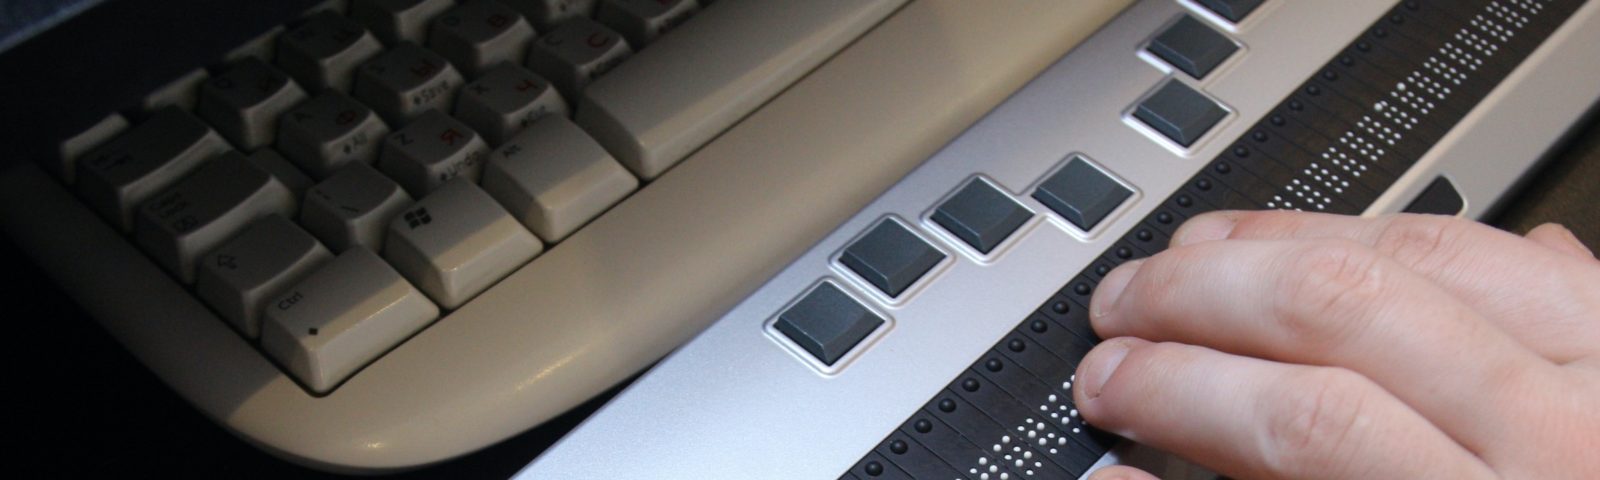 hands using braille keyboard